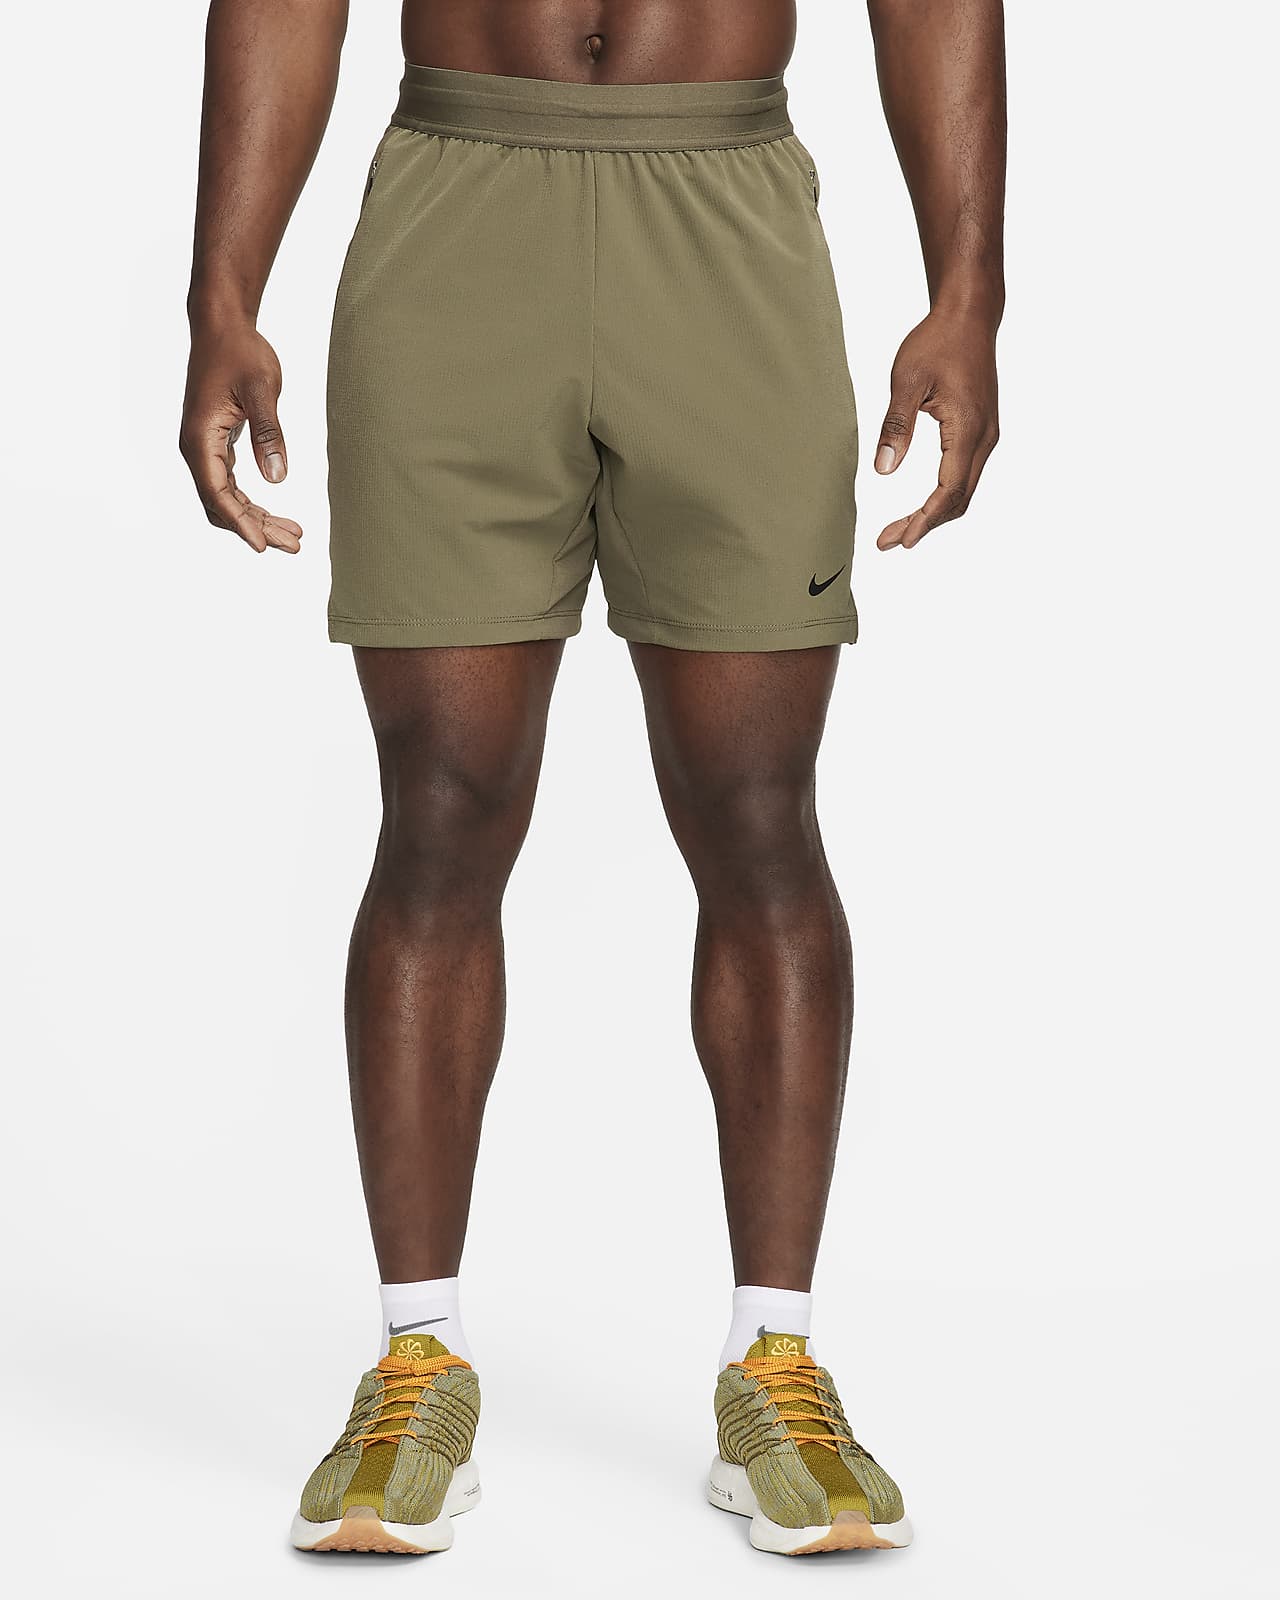 Men's Tight Shorts. Nike CA